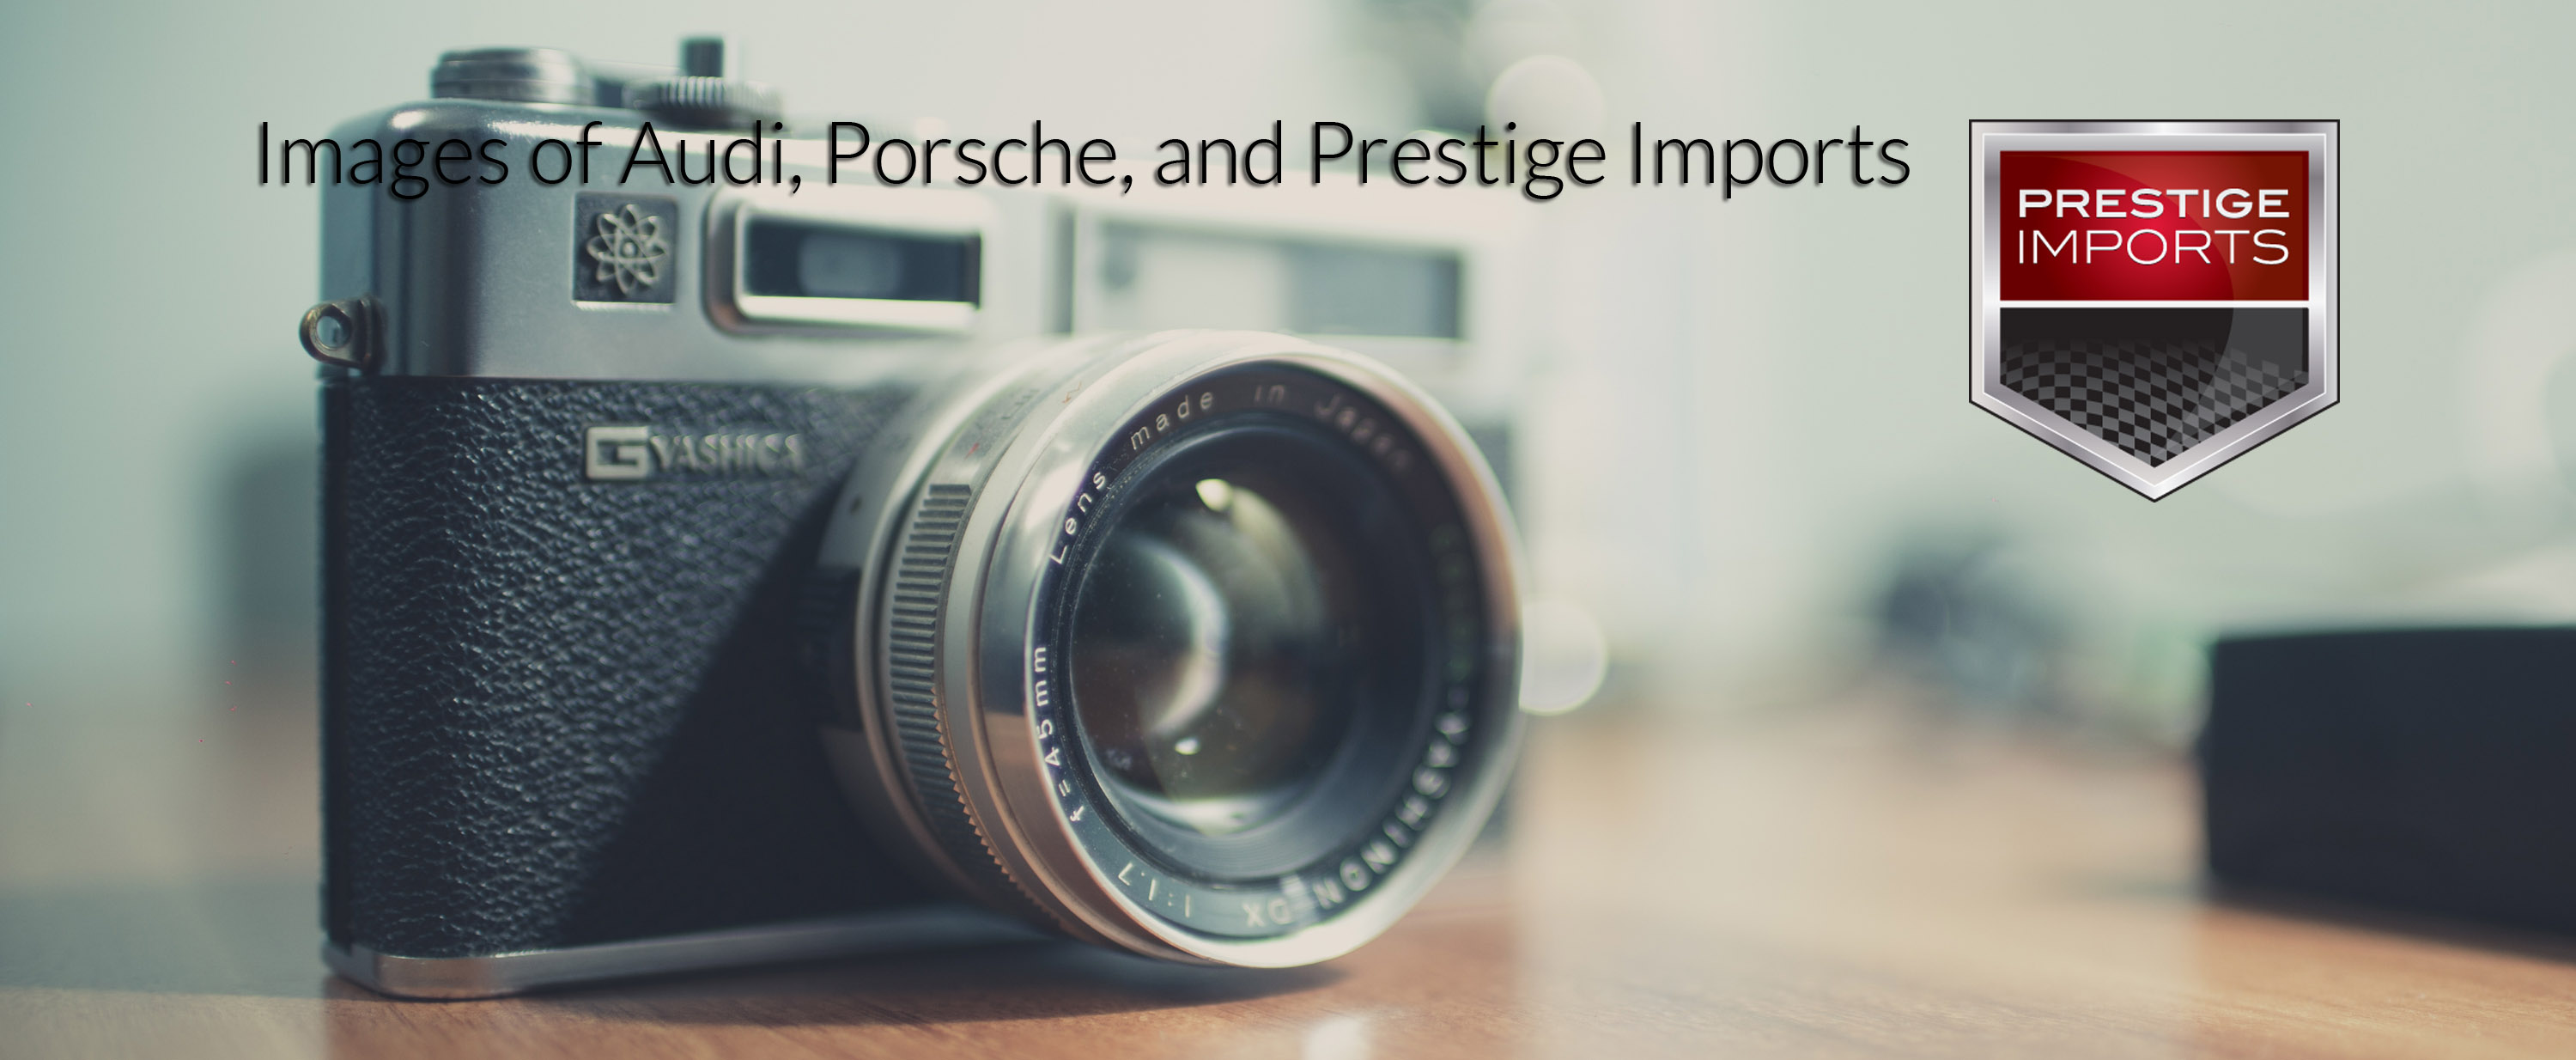 Instagram images of Audi, Porsche, and Prestige Imports